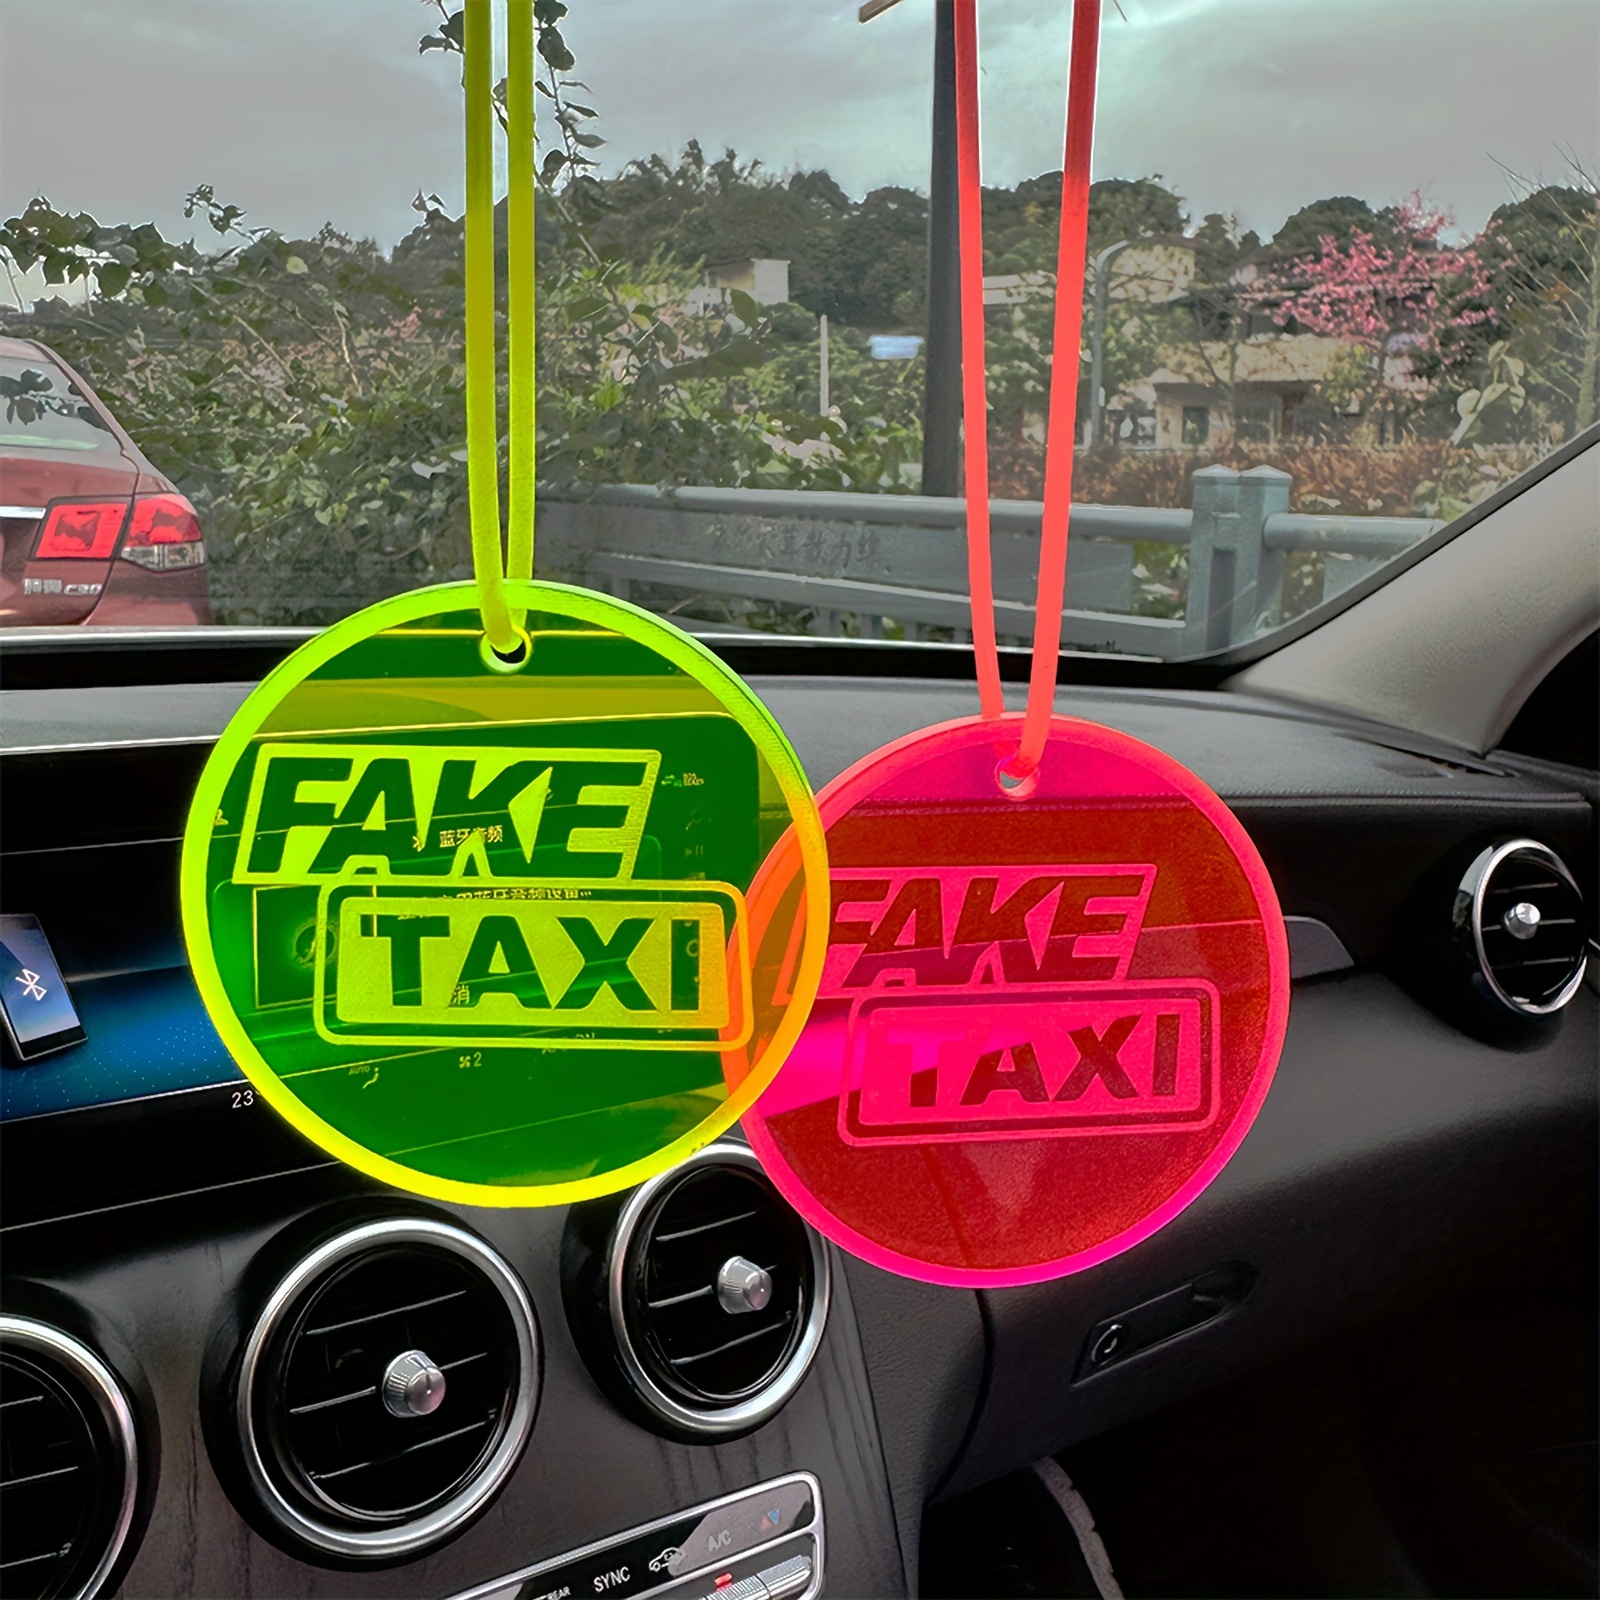 Autoanhänger: Das Taxi fürs Auto